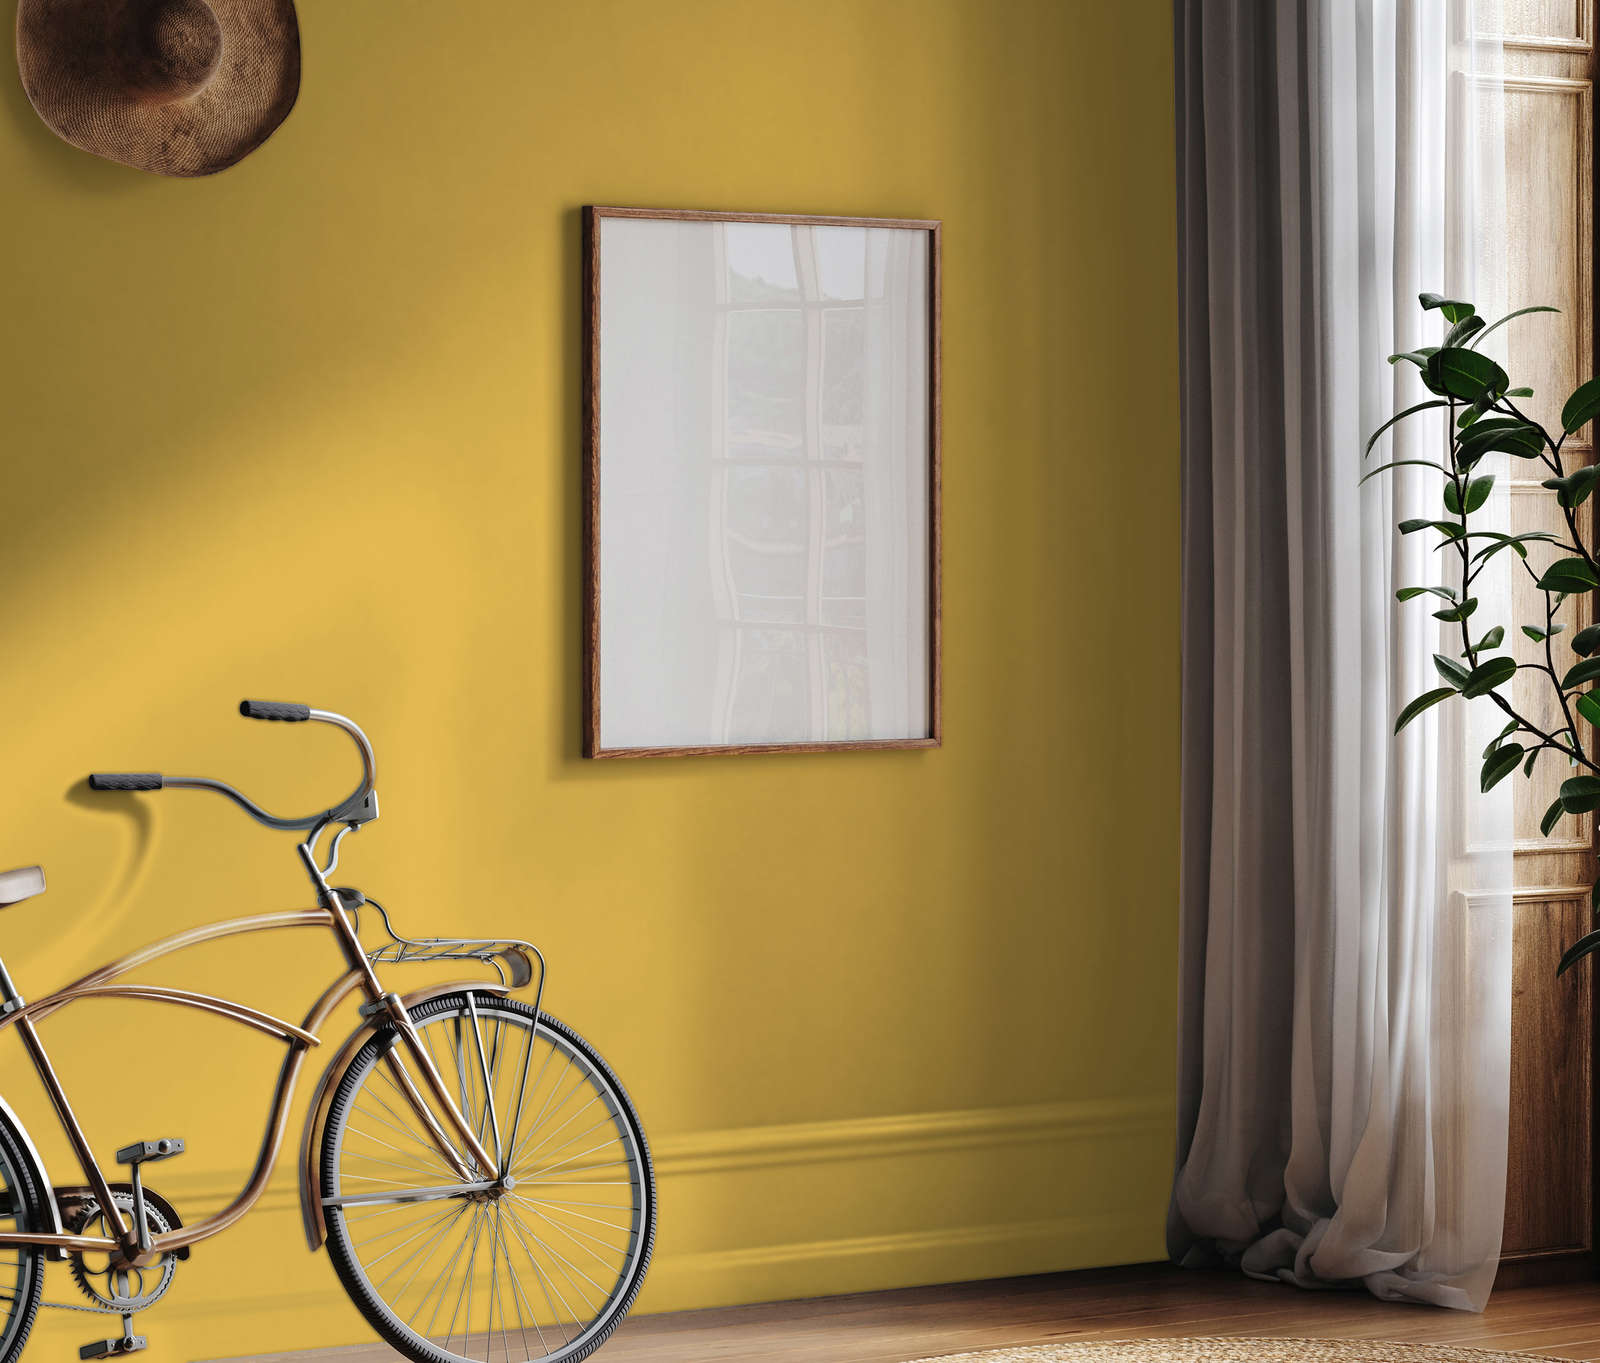             Premium Wall Paint Active Vanilla »Juicy Yellow« NW803 – 5 litre
        